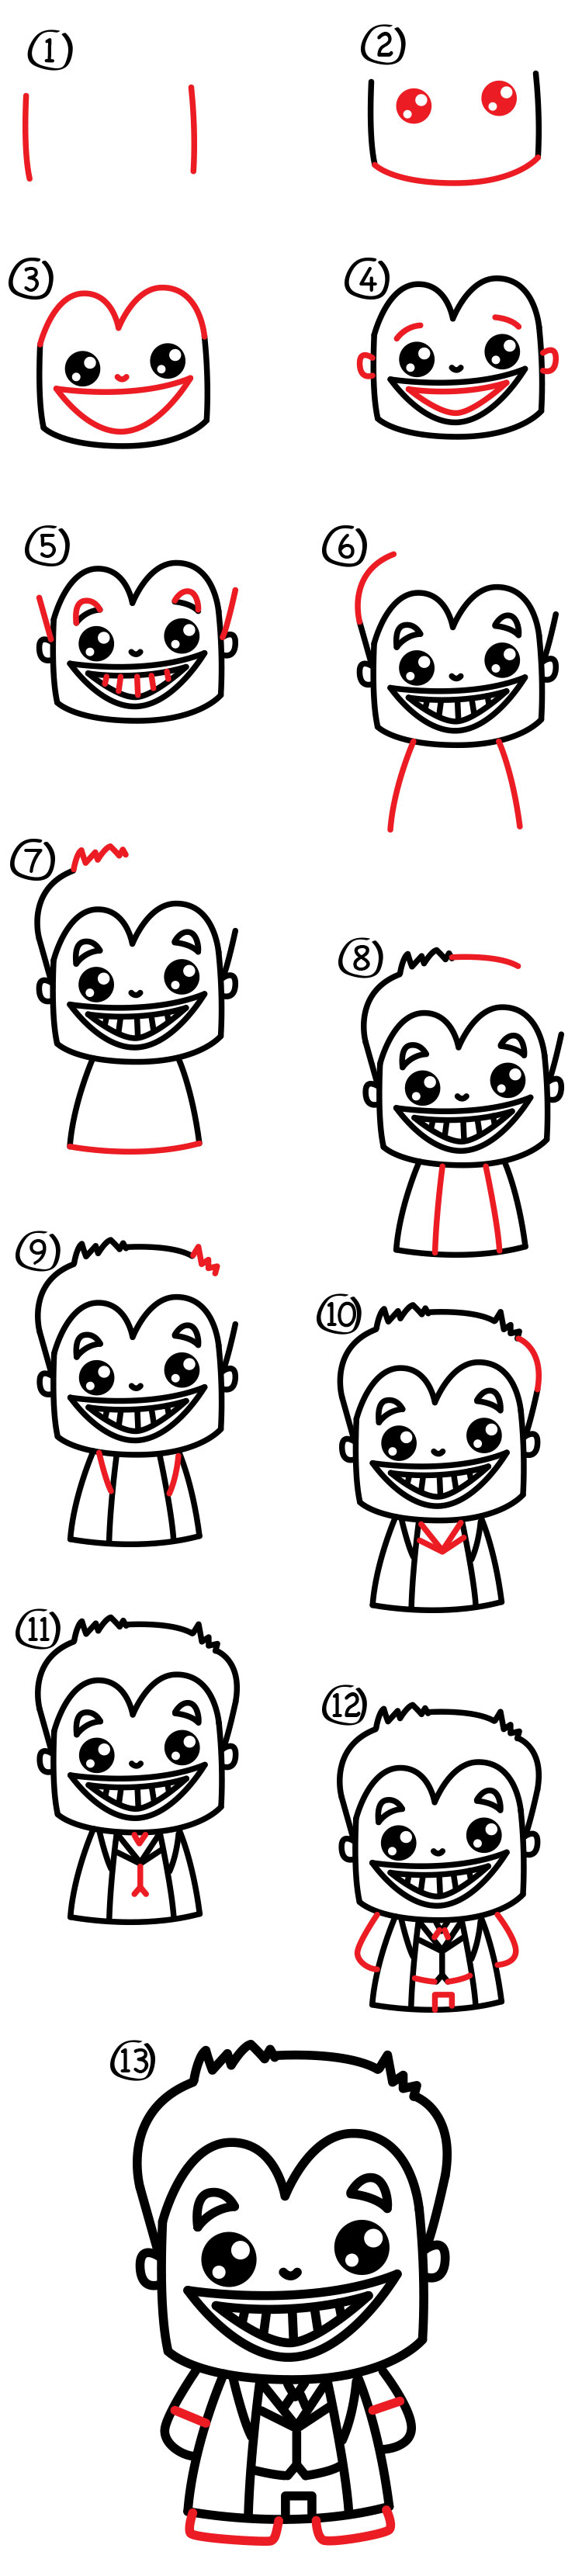 Featured image of post Joker Face Drawing Cartoon - 640 x 640 jpeg 38kb.